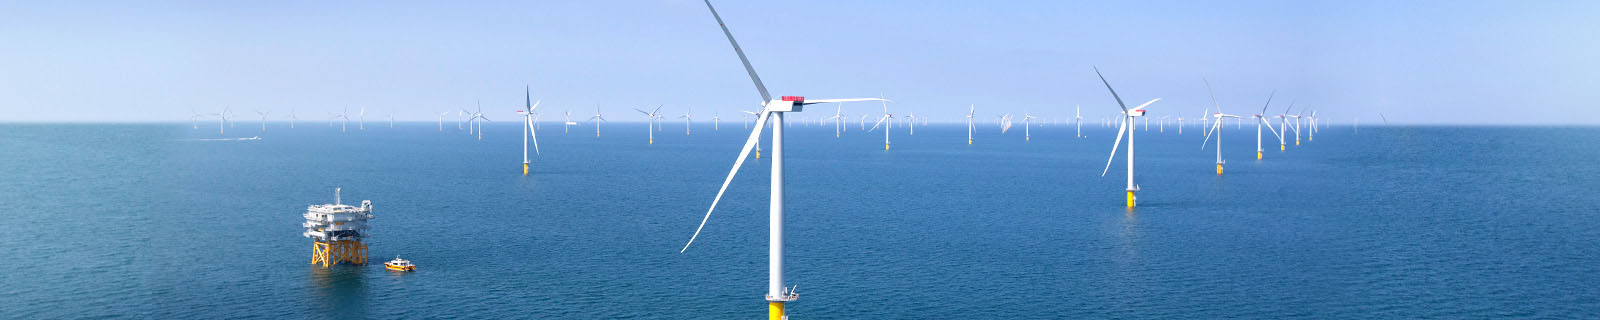 ScottishPower Renewables